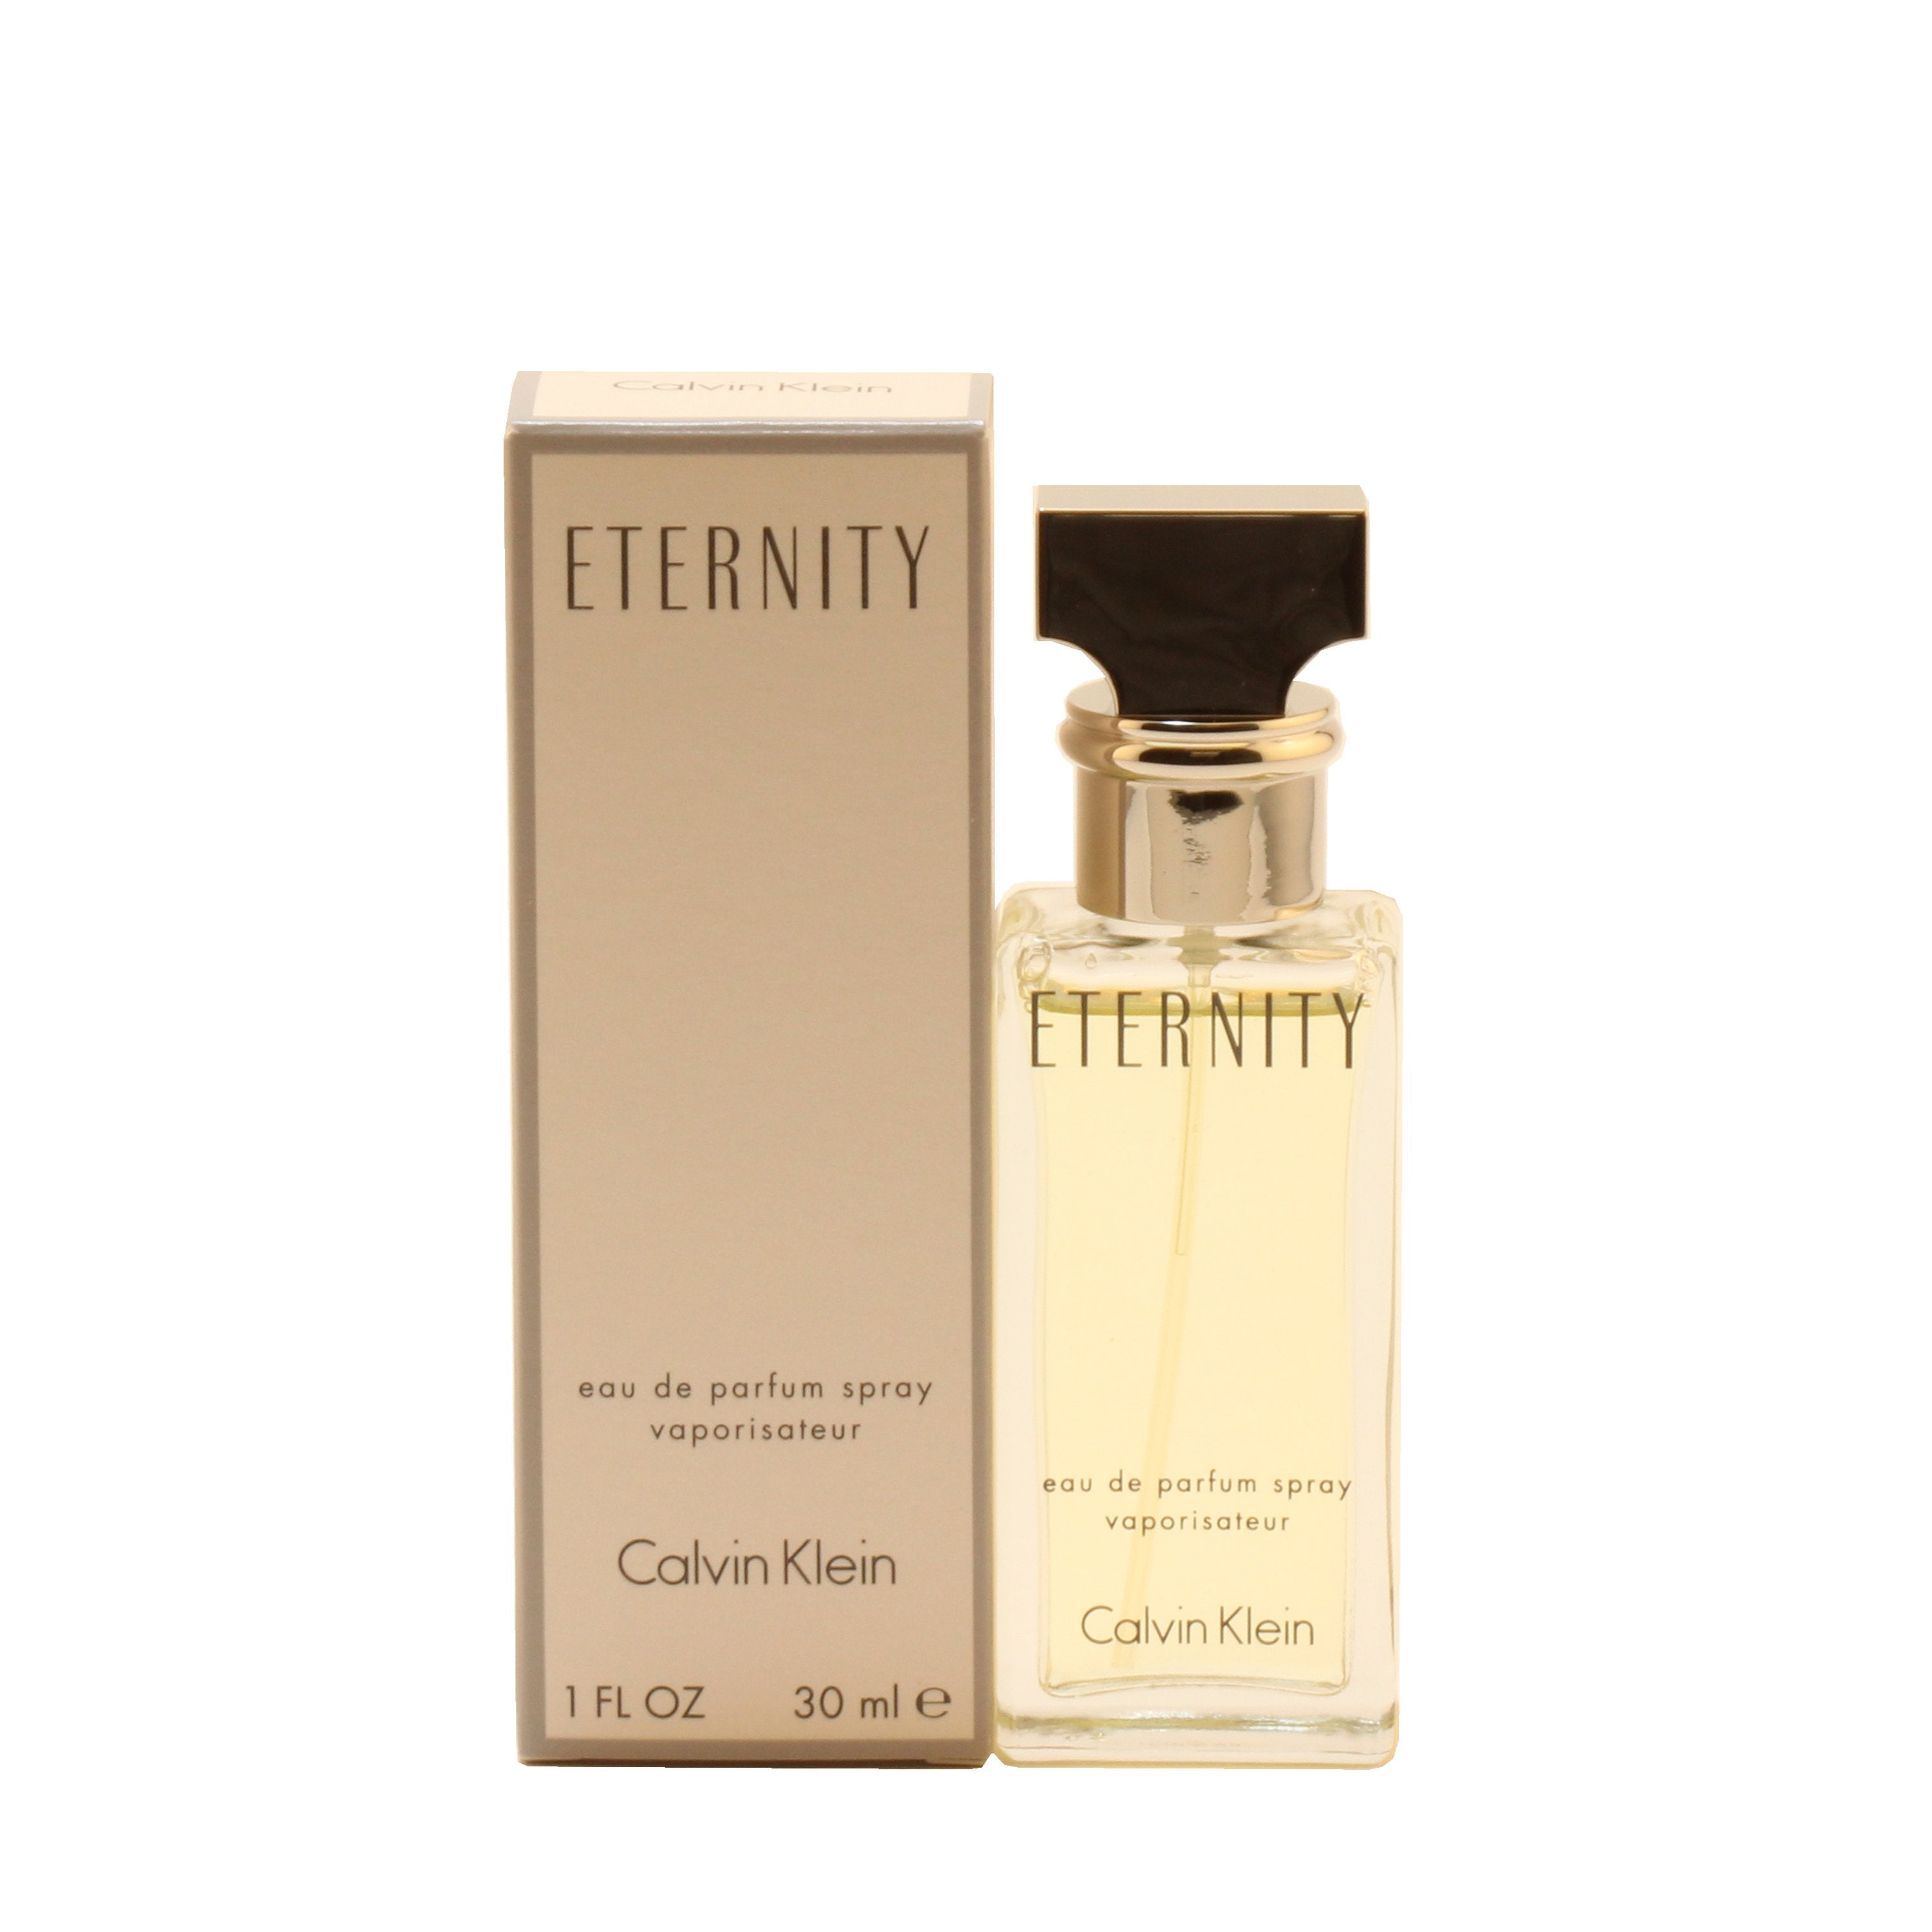 - – FOR PARFUM BY Room SPRAY DE CALVIN KLEIN EAU ETERNITY WOMEN Fragrance